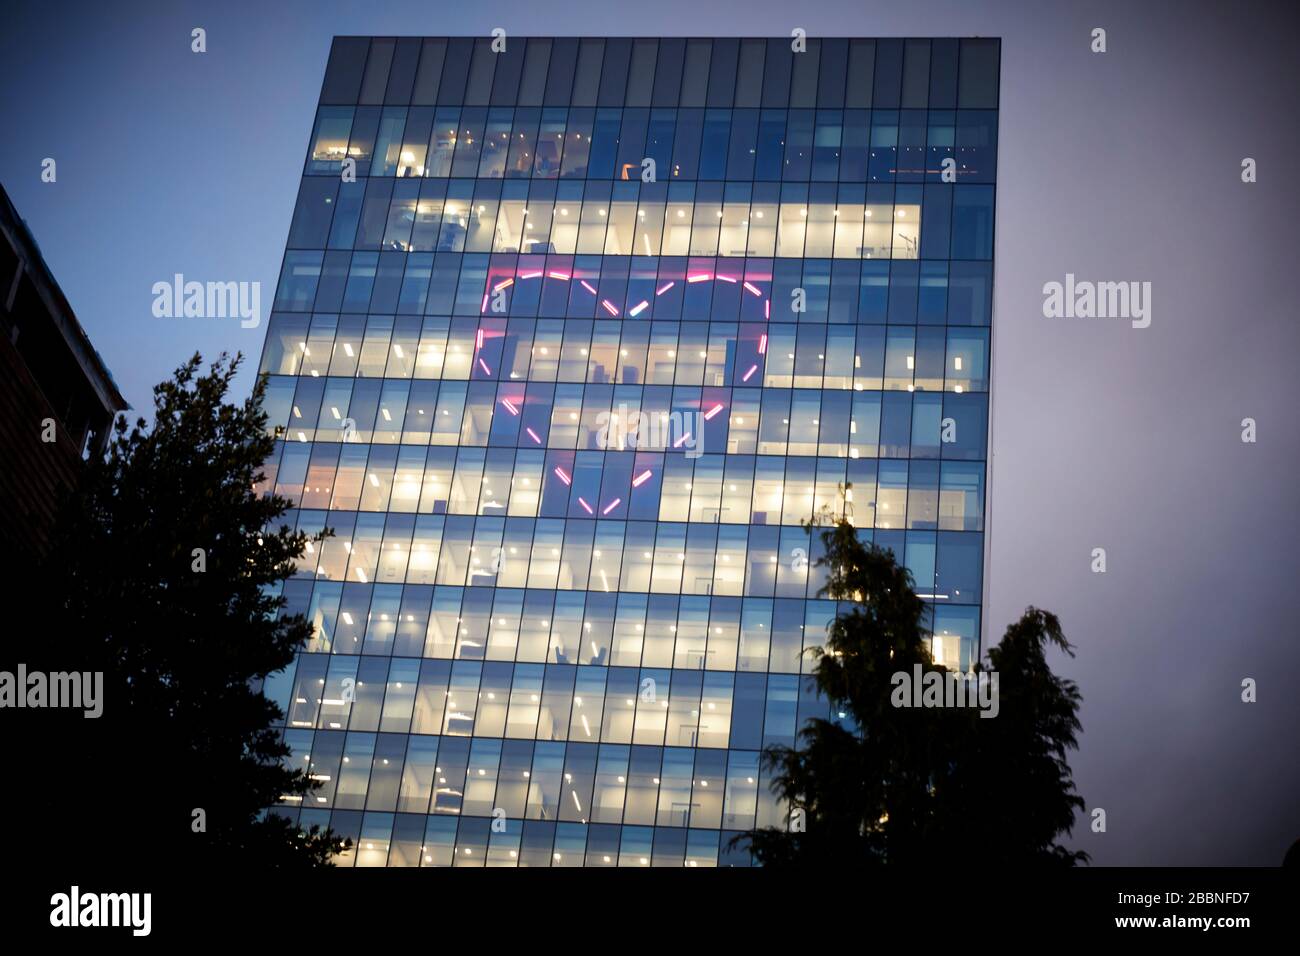 No. 1 Spinningfields, Manchester con neón amor corazón pantalla de la ventana para el día de San Valentín 'con amor' instalación Foto de stock